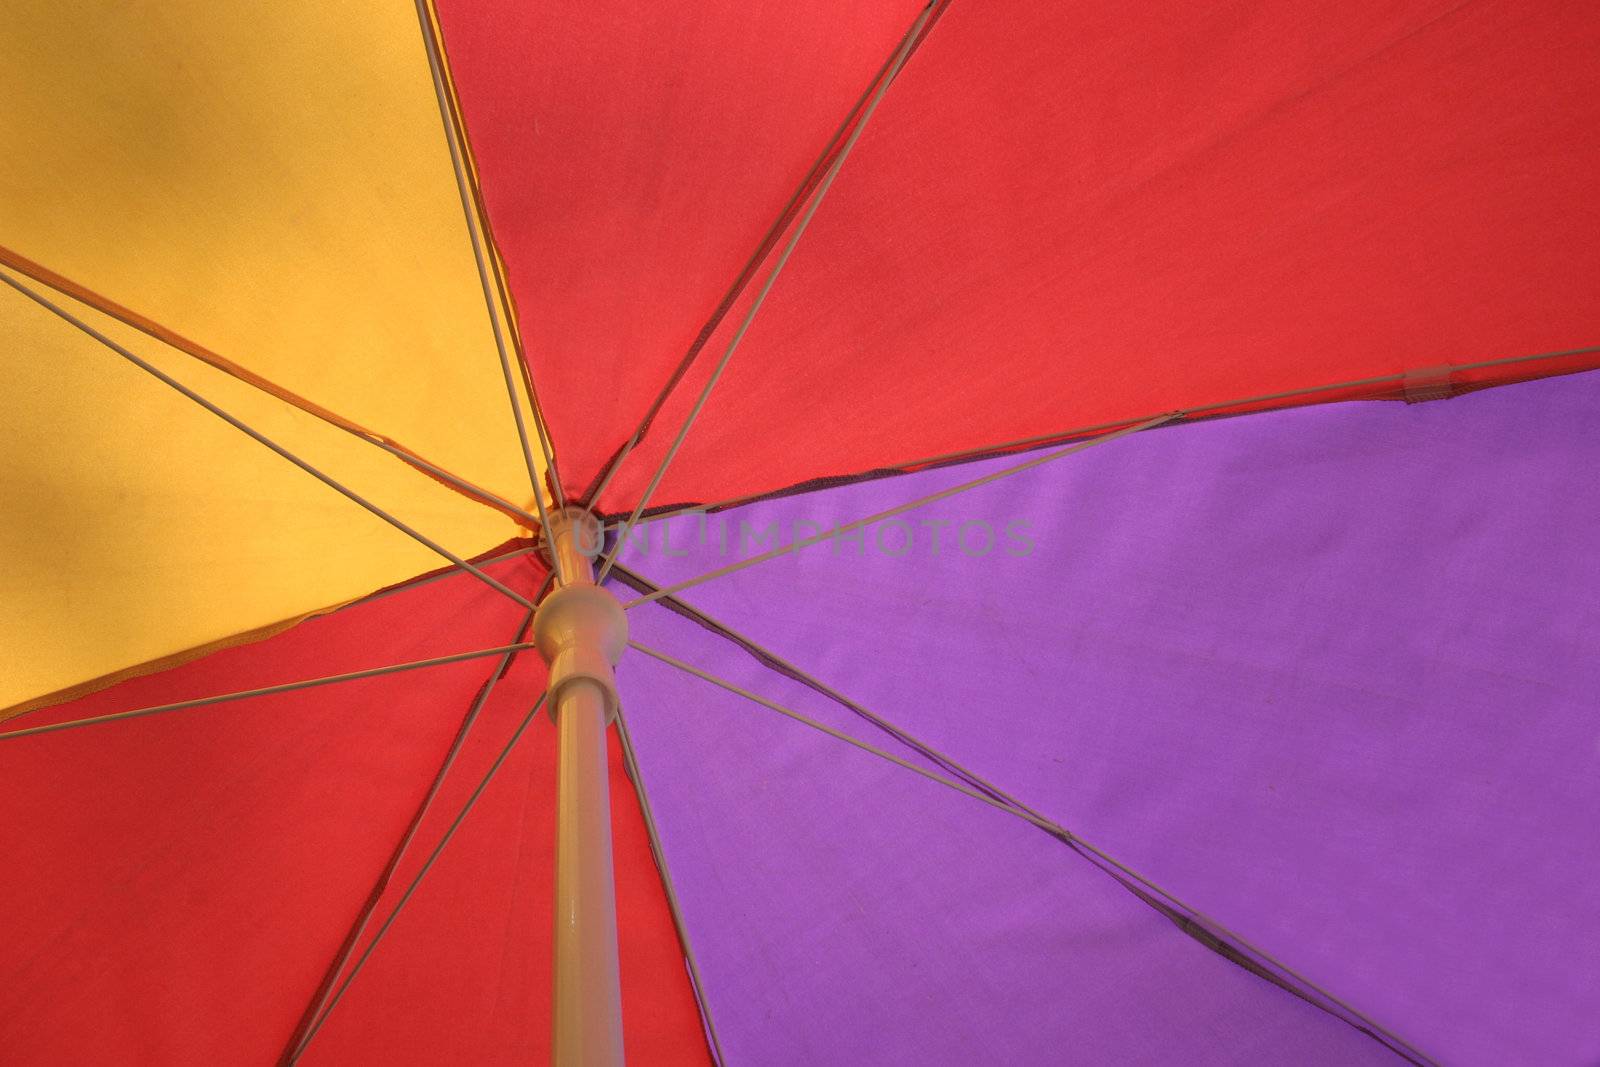 abstract of a multi coloured umbrella